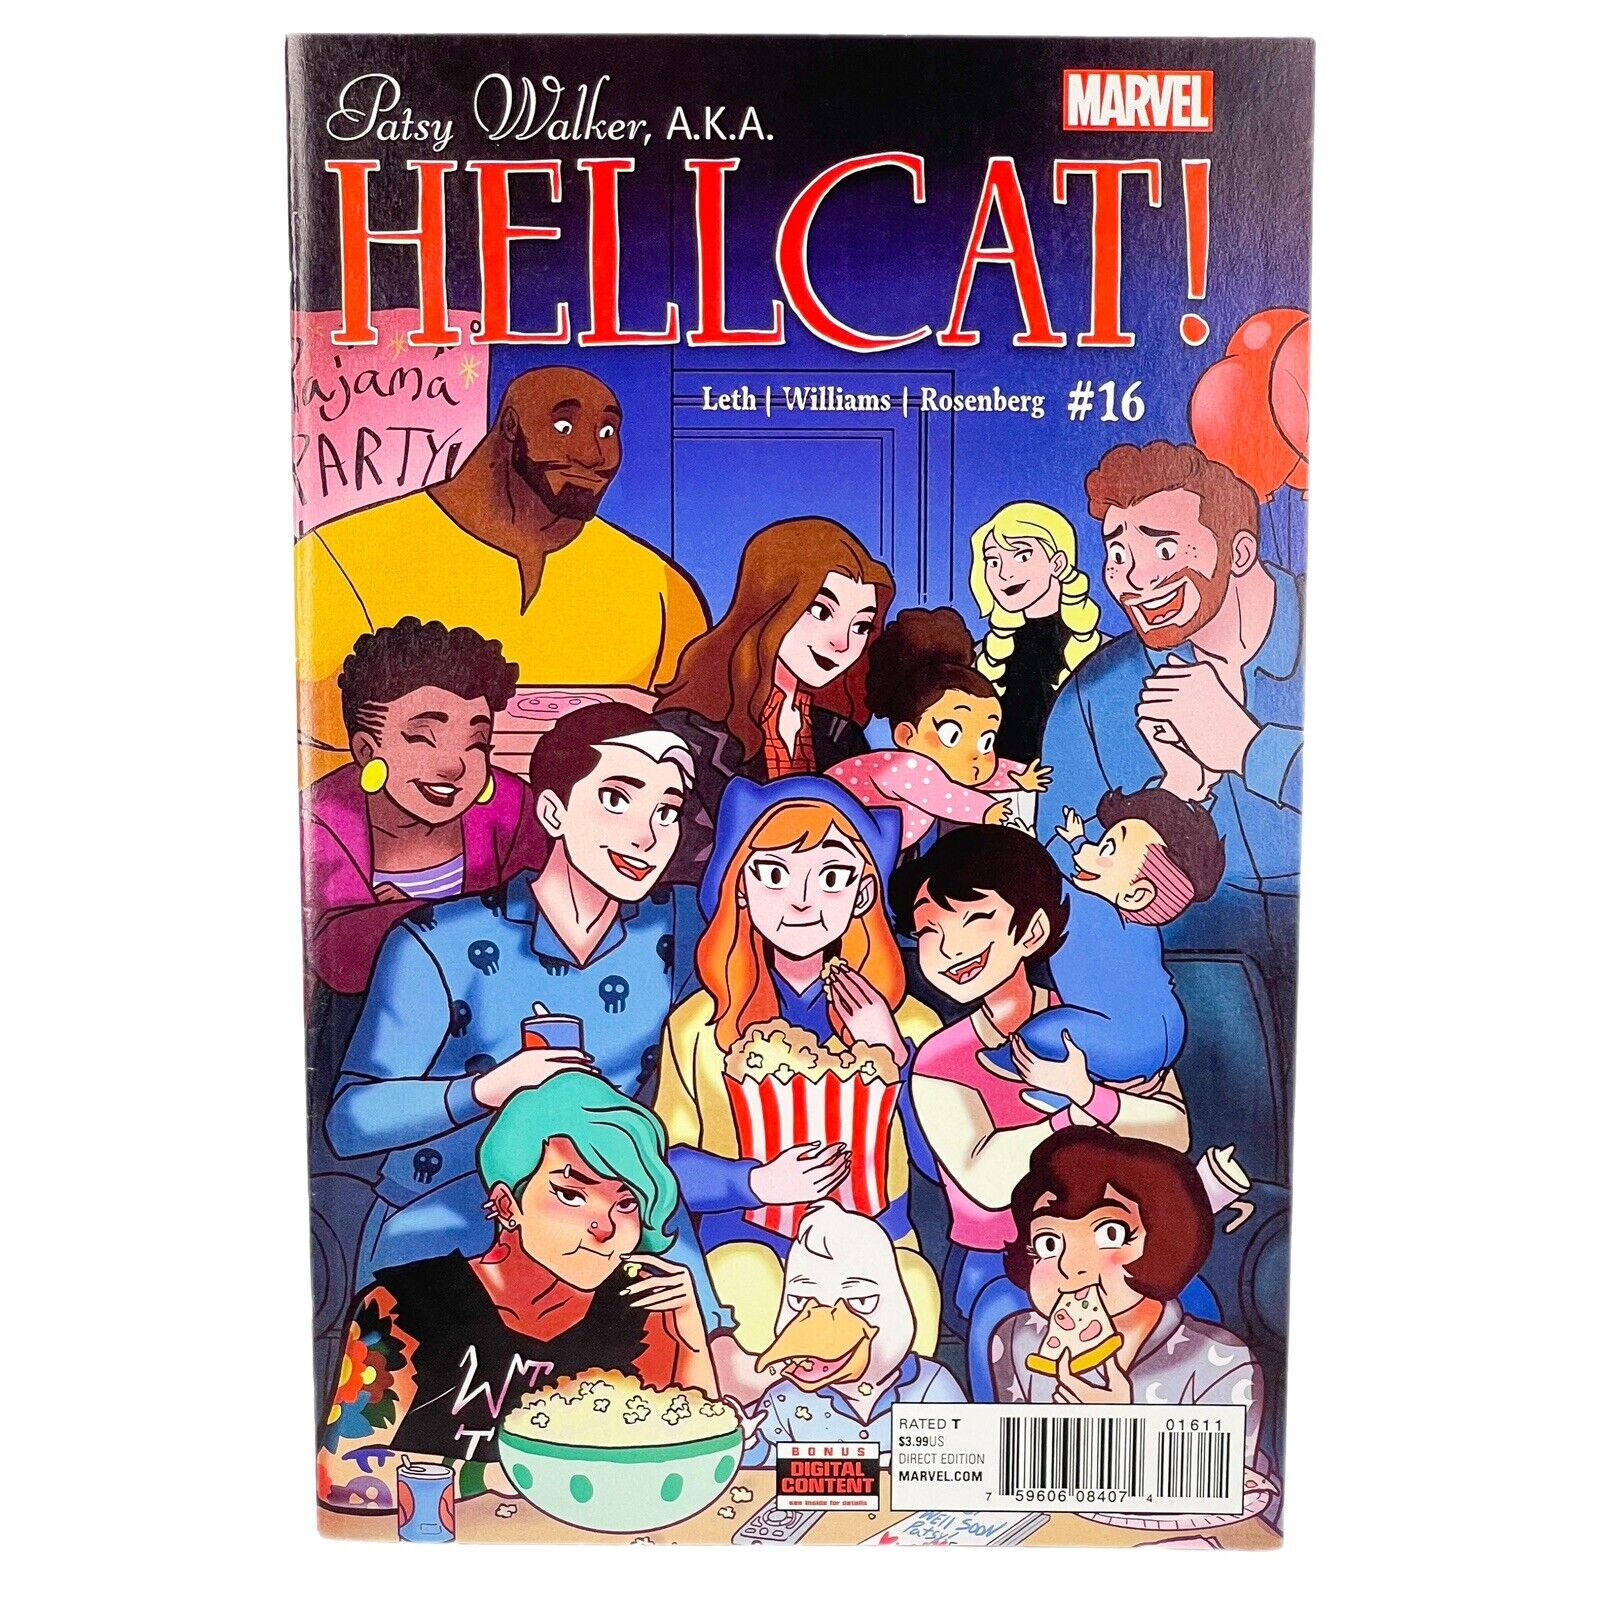 Patsy Walker AKA Hellcat Issue #16 Marvel 1st Print May 2017 Direct